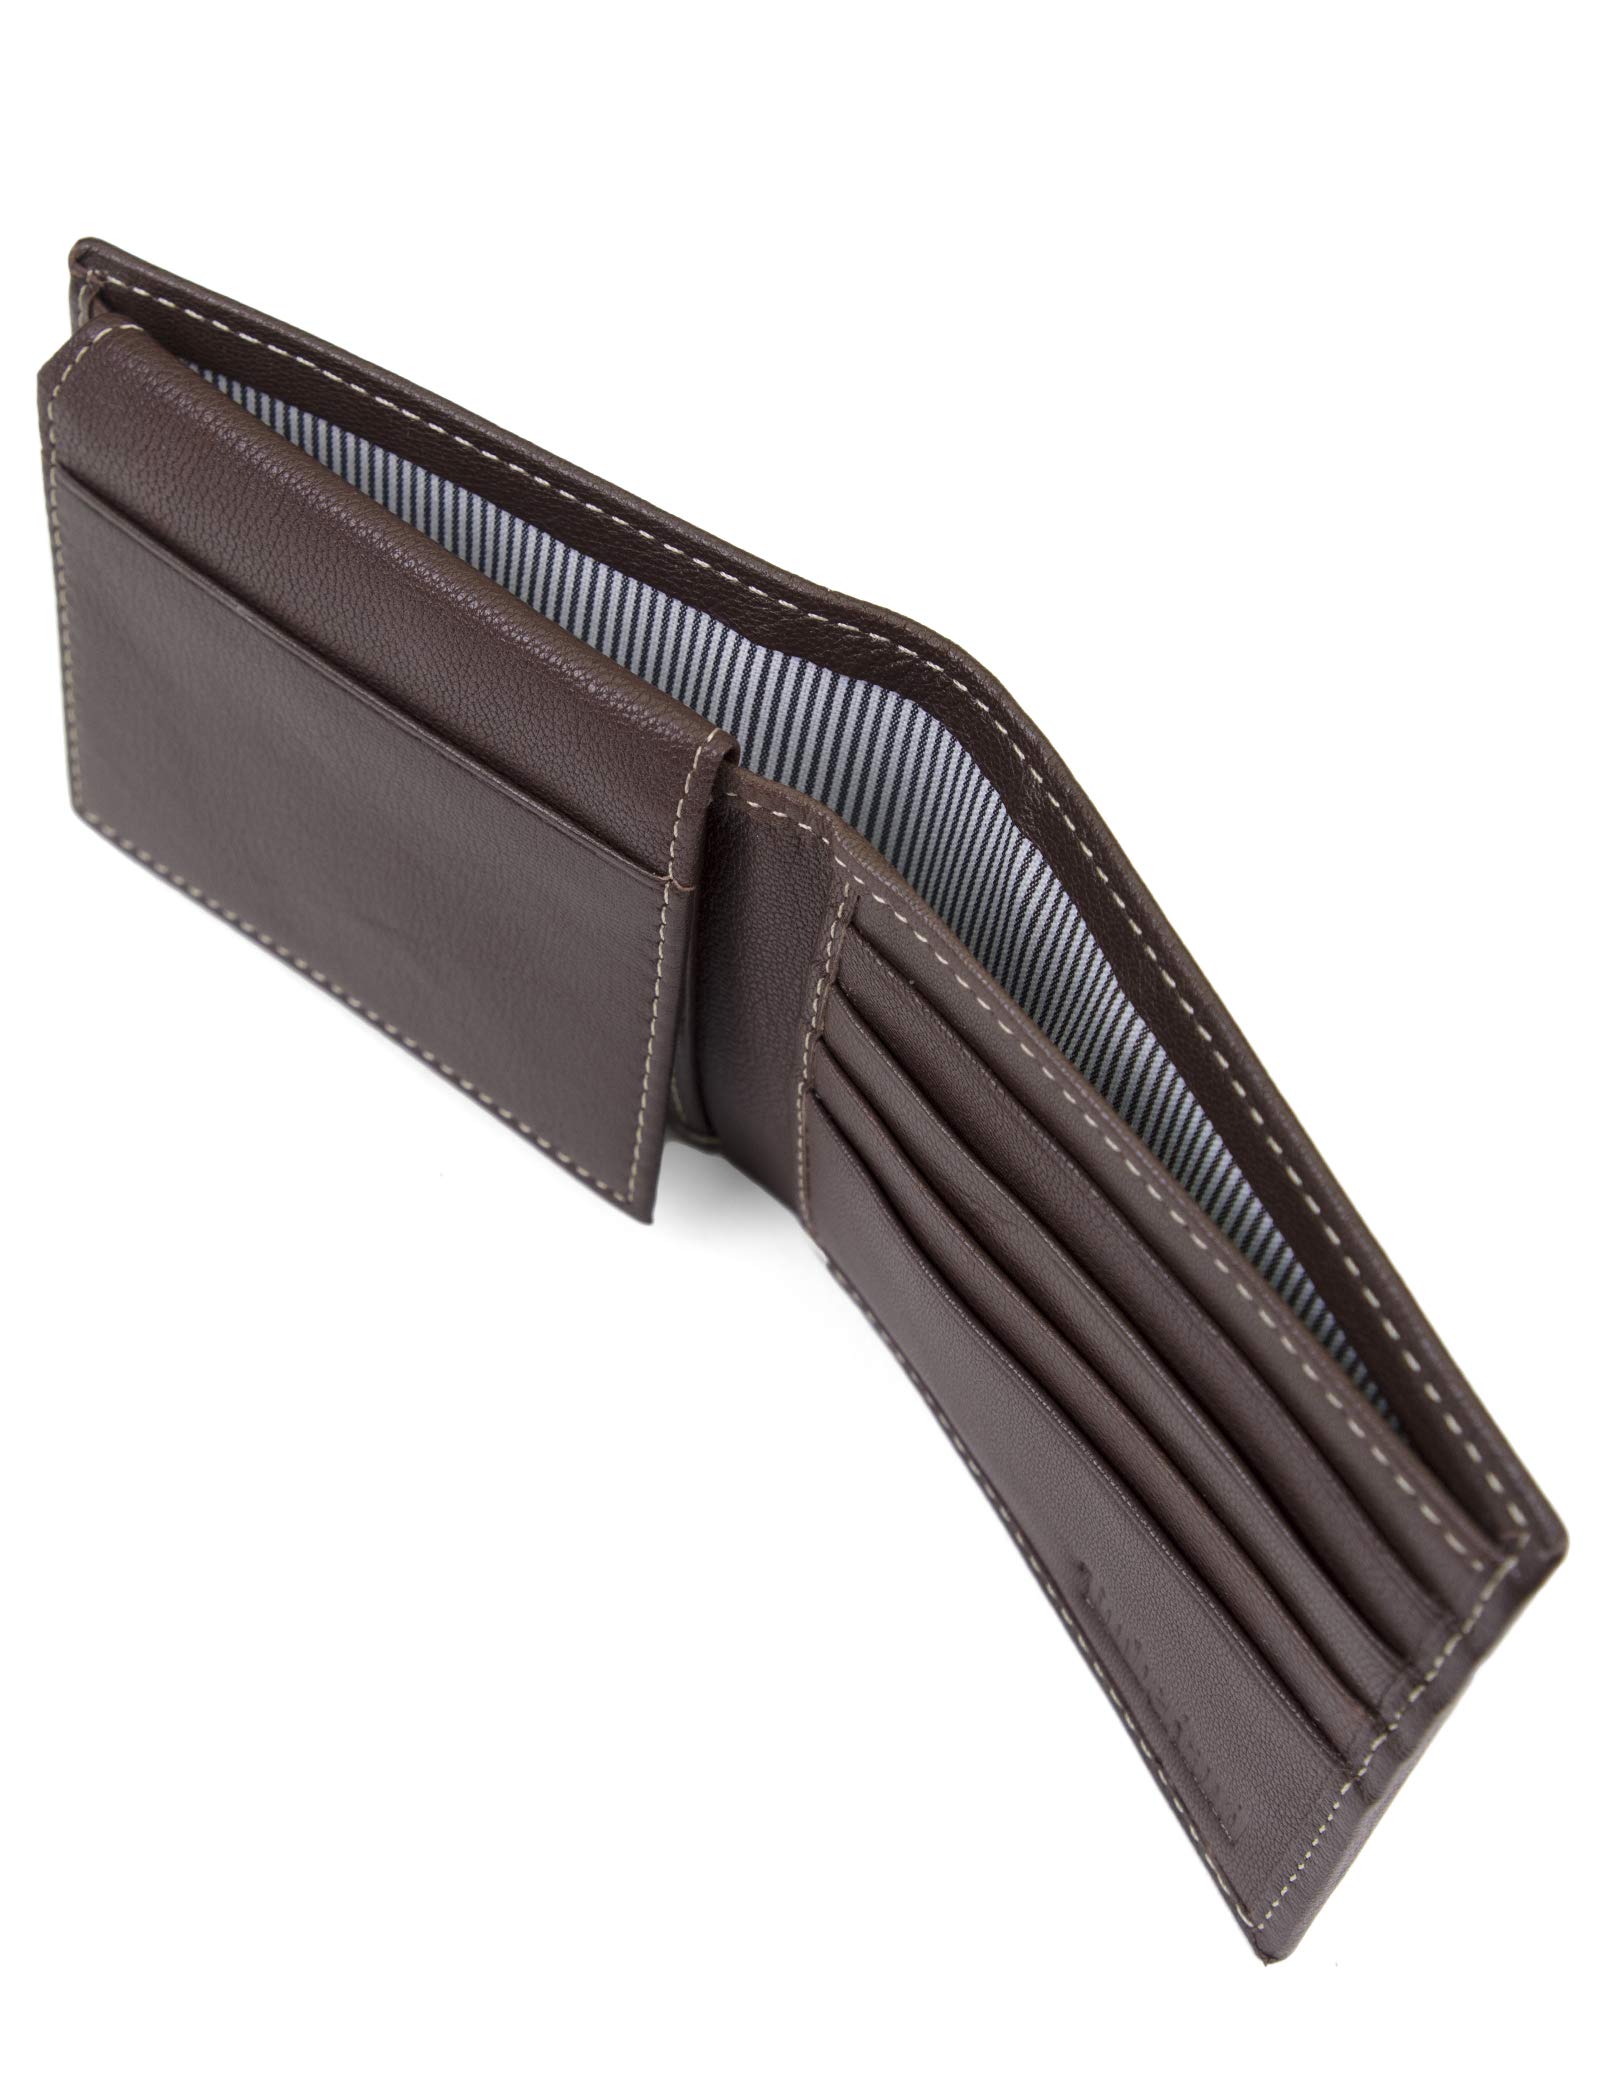 Timberland Men's Leather Wallet Wallet Black, multicolor